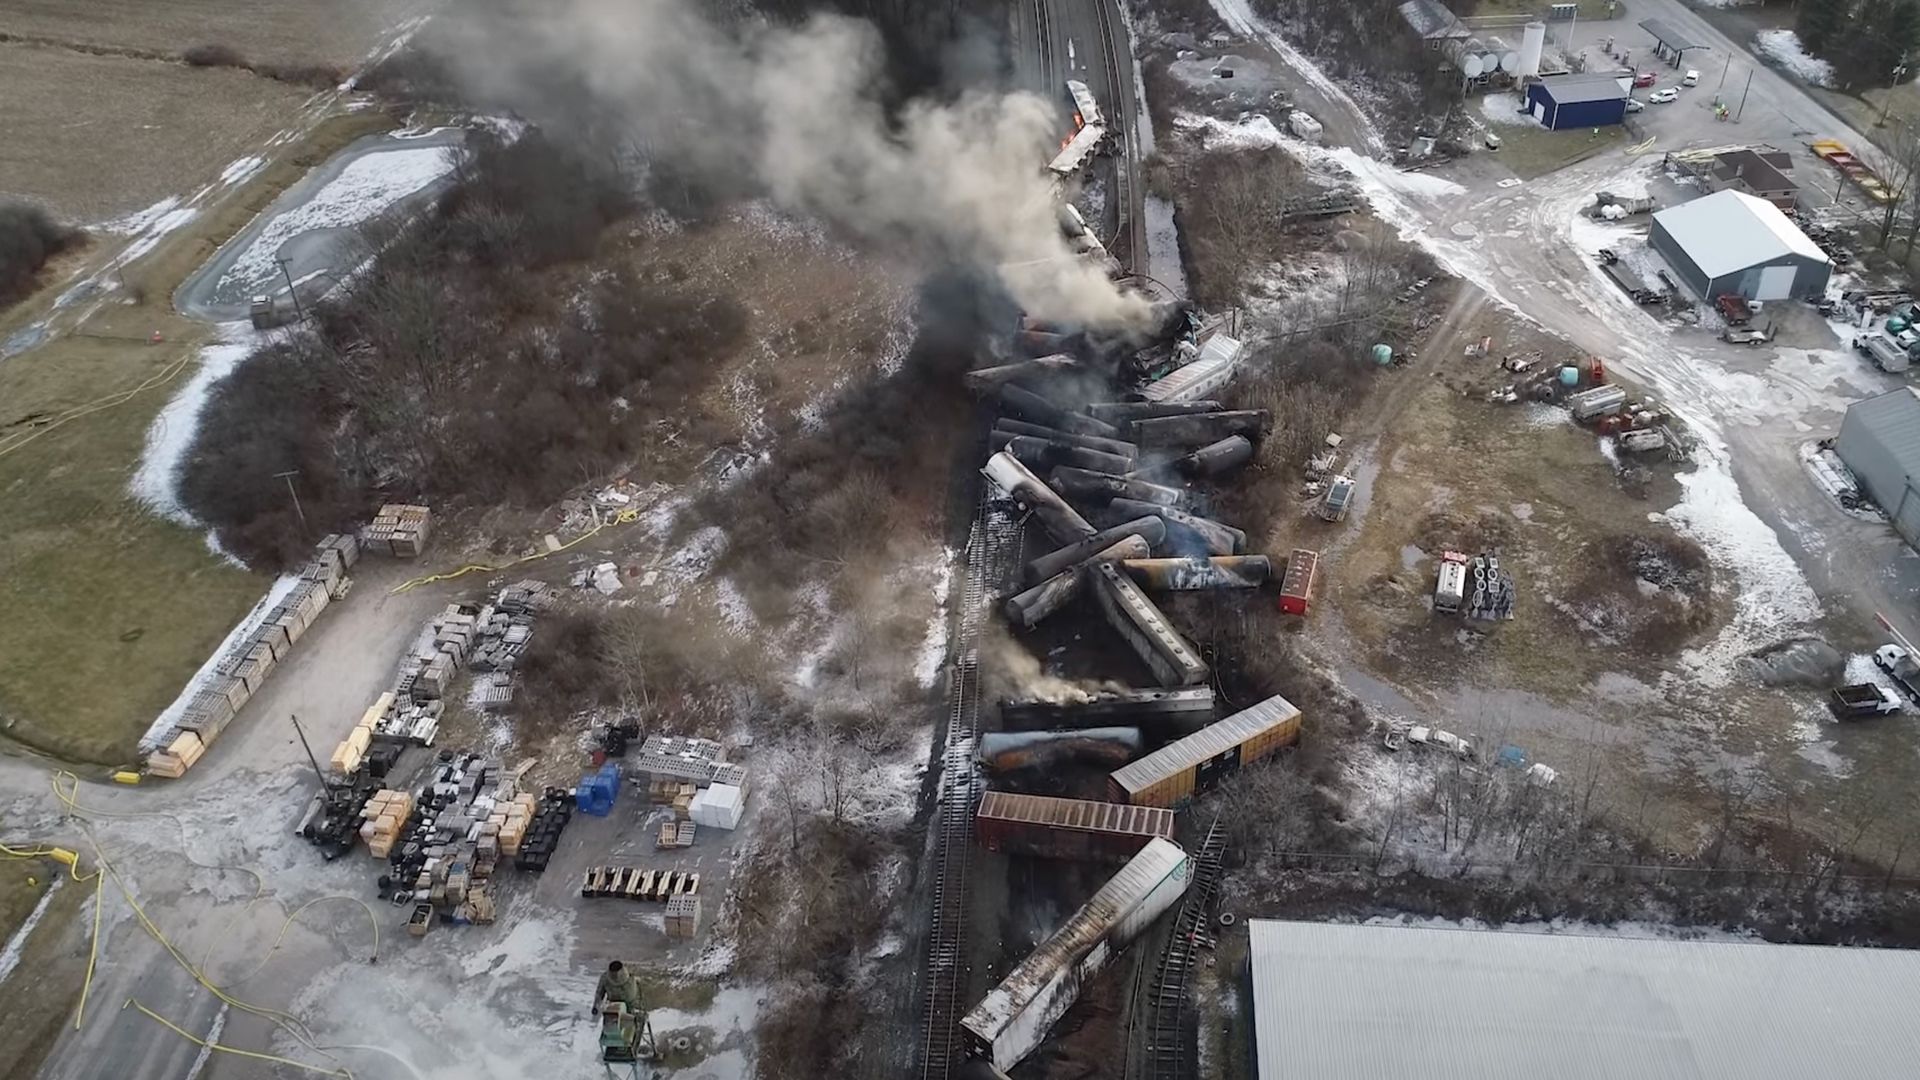 The site of the train derailment in East Palestine, Ohio, on Feb. 15.